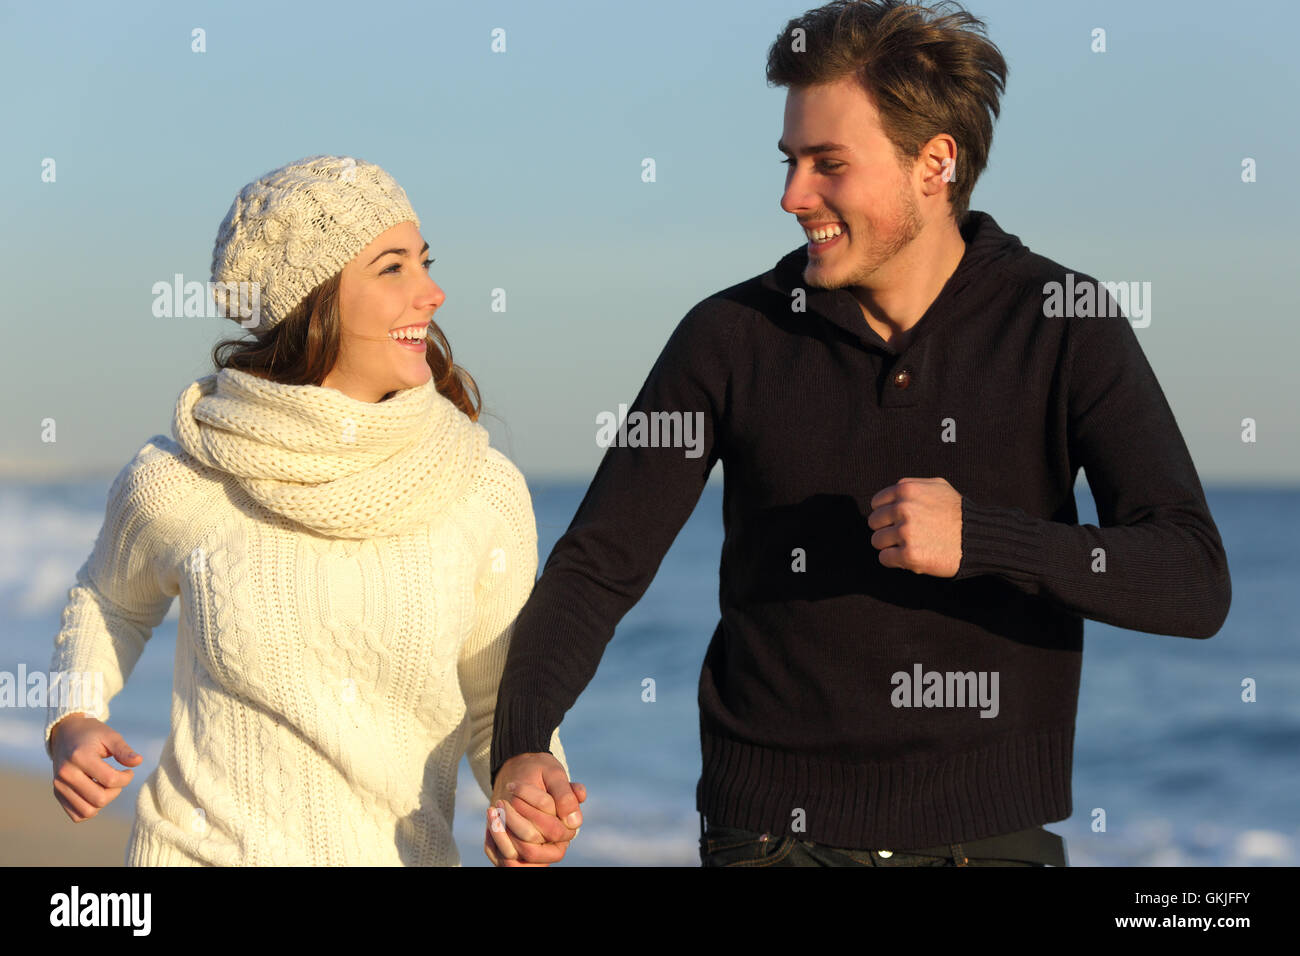 Couple running on the beach in winter Stock Photo